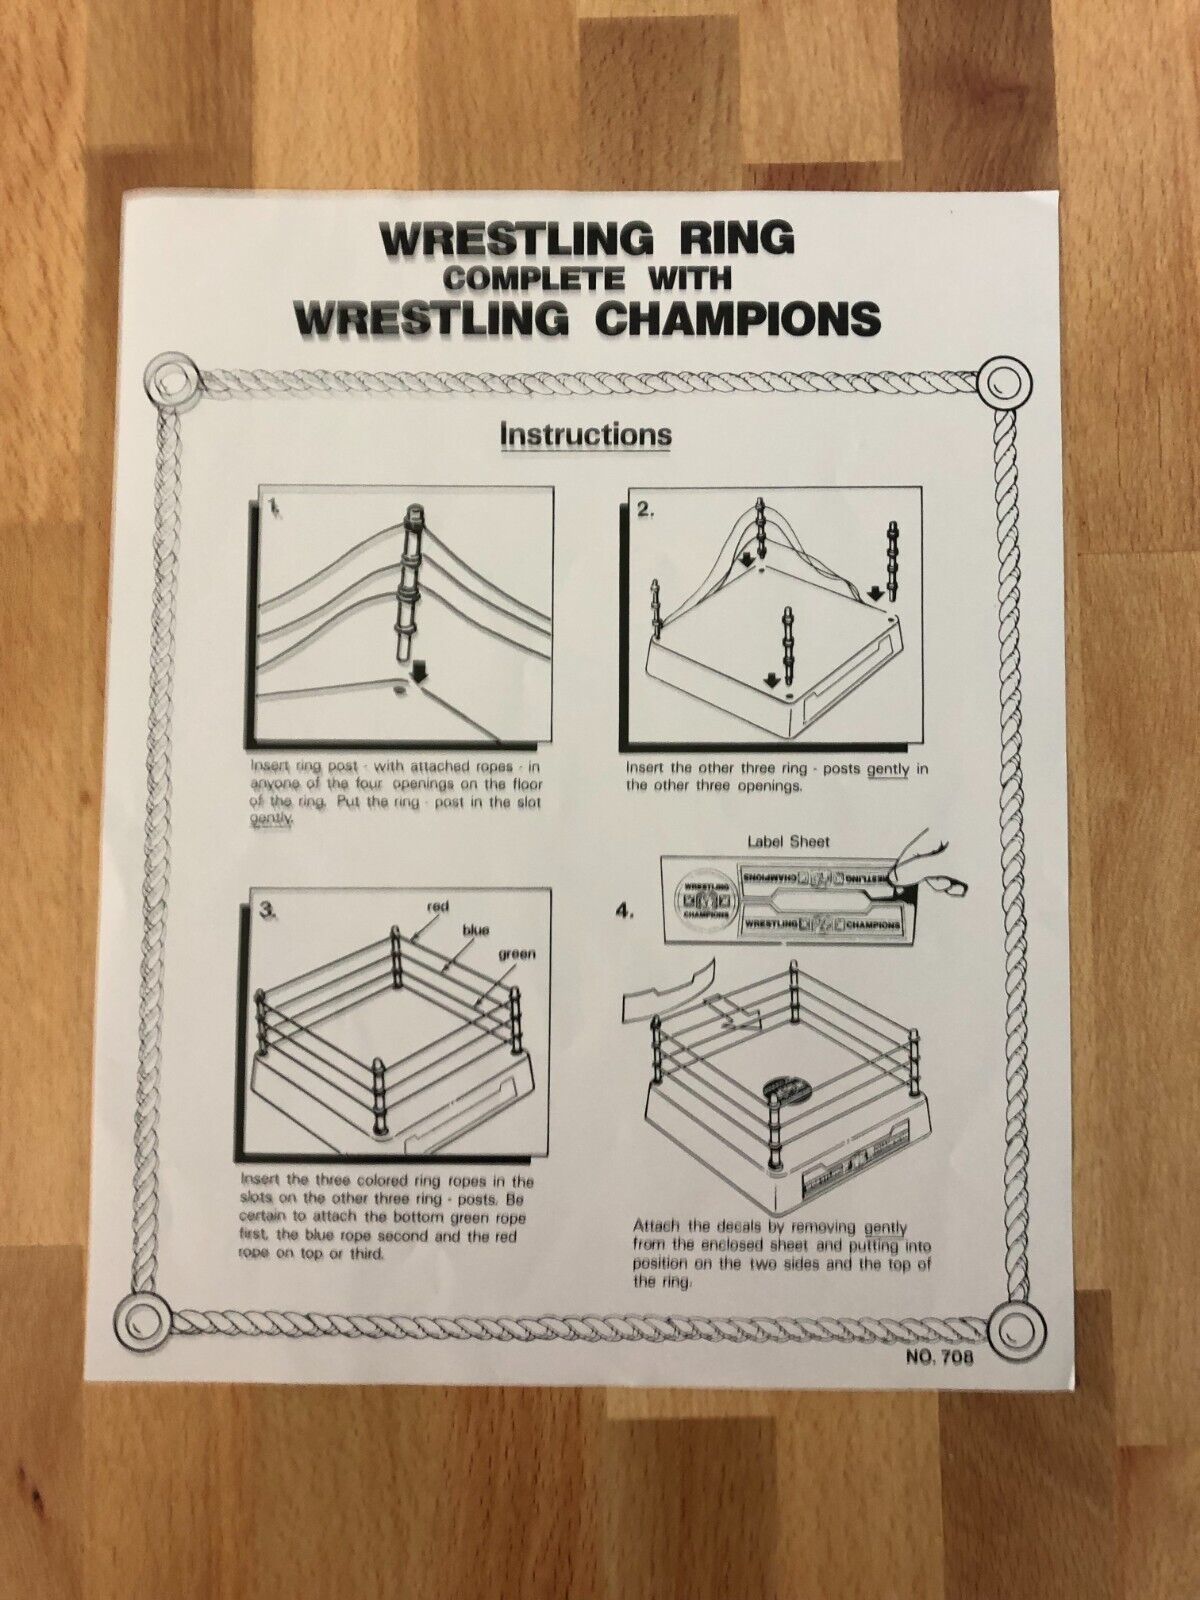 Madison Ltd. Wrestling Champions Bootleg/Knockoff Wrestling Ring Complete With Wrestling Champions